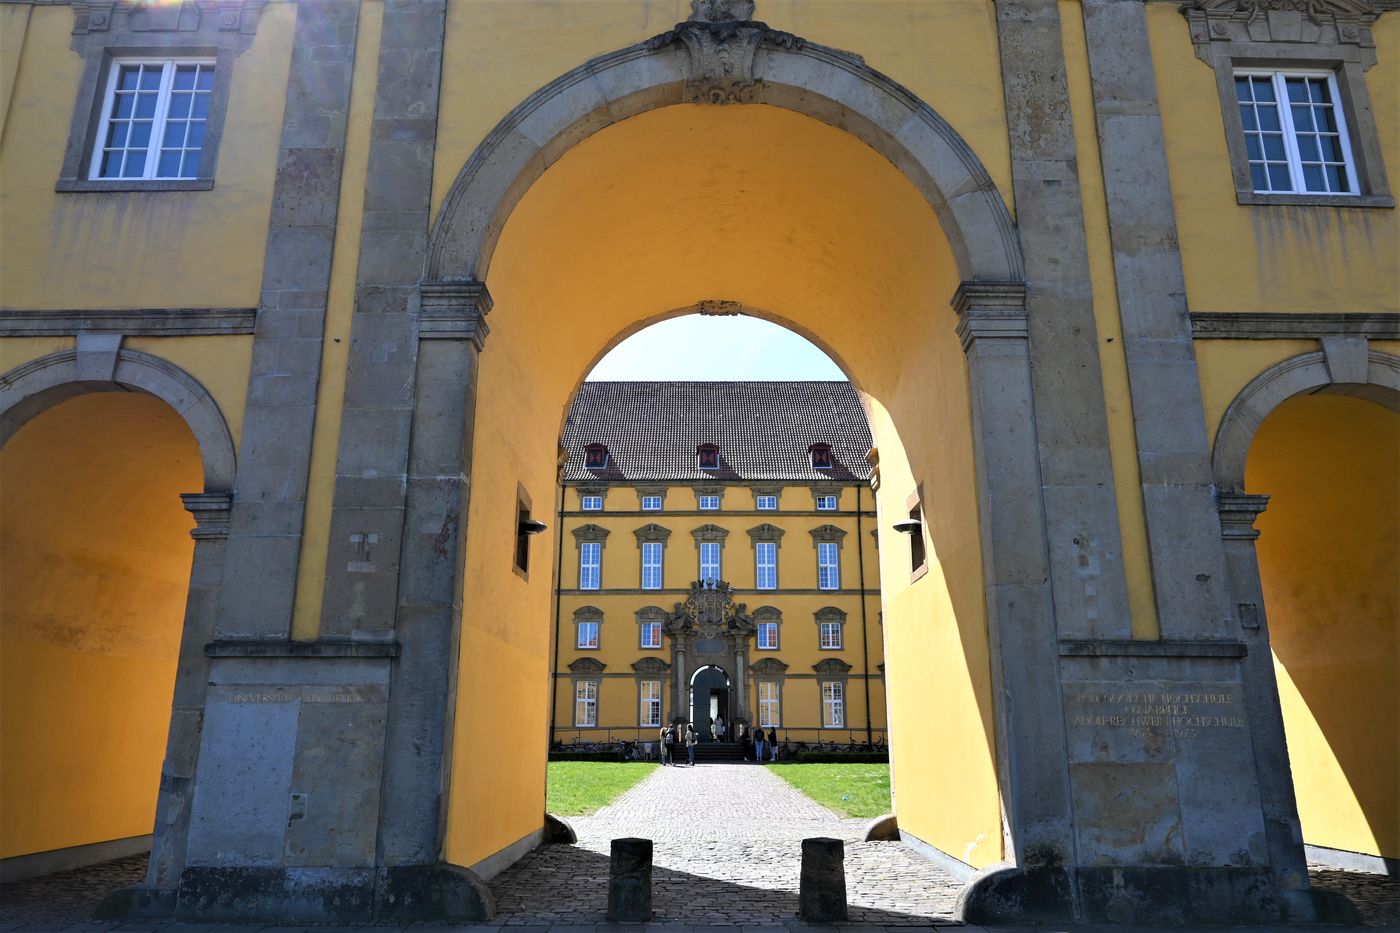 Erkunde das historische Schloss im Herzen Osnabrücks